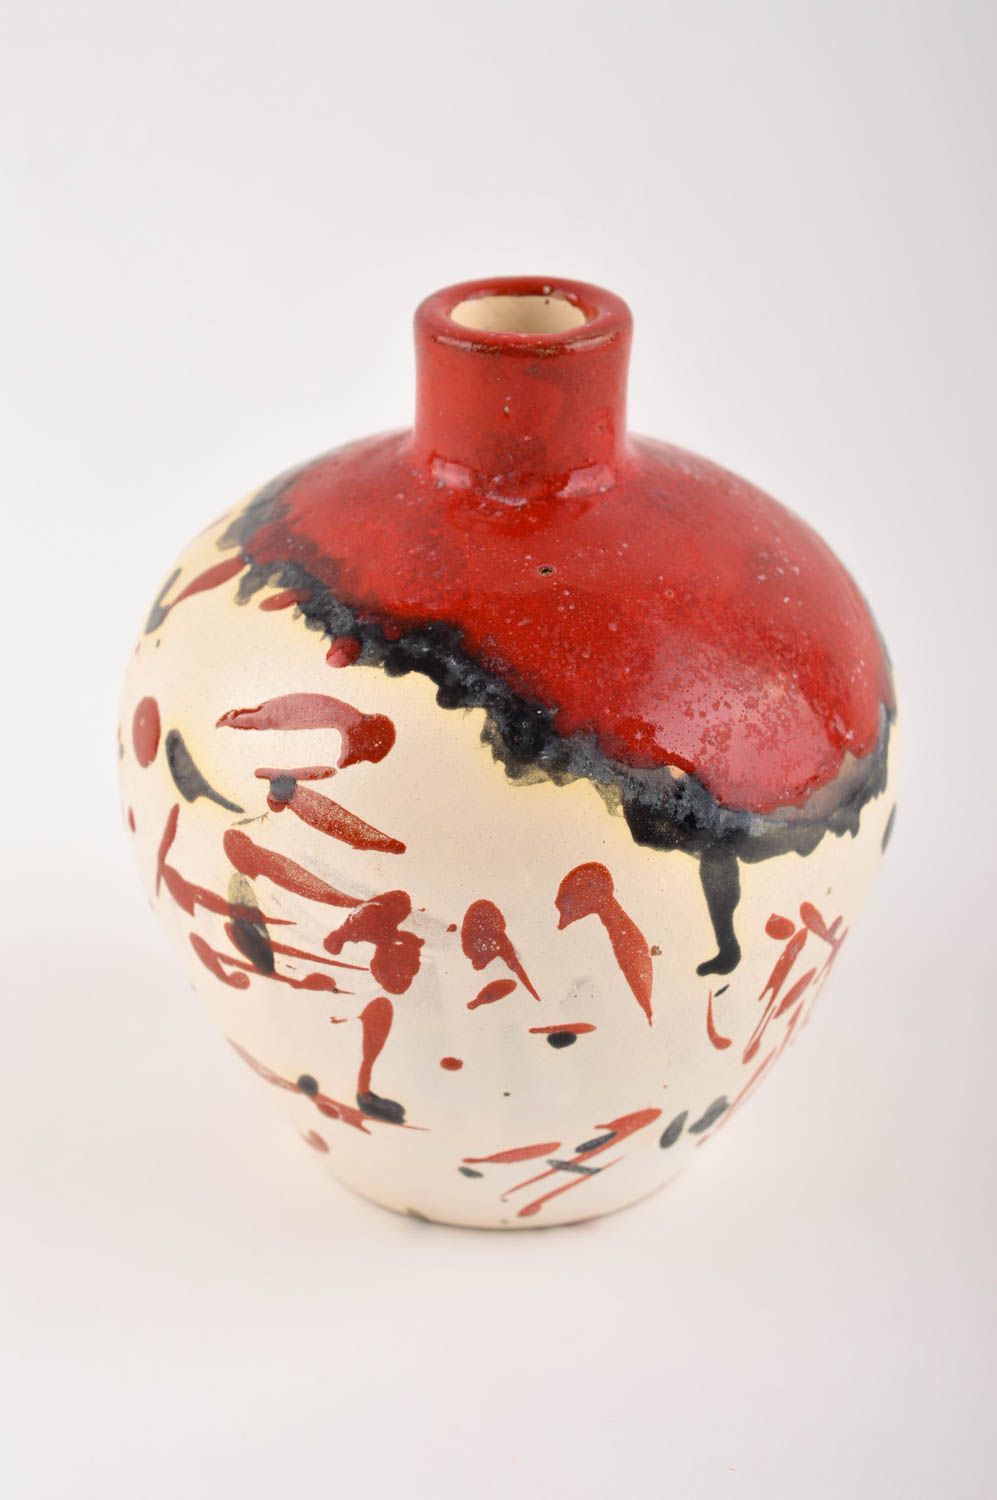 12 oz ceramic hand-painted sake, vodka pitcher 5,51, 0,78 lb photo 2